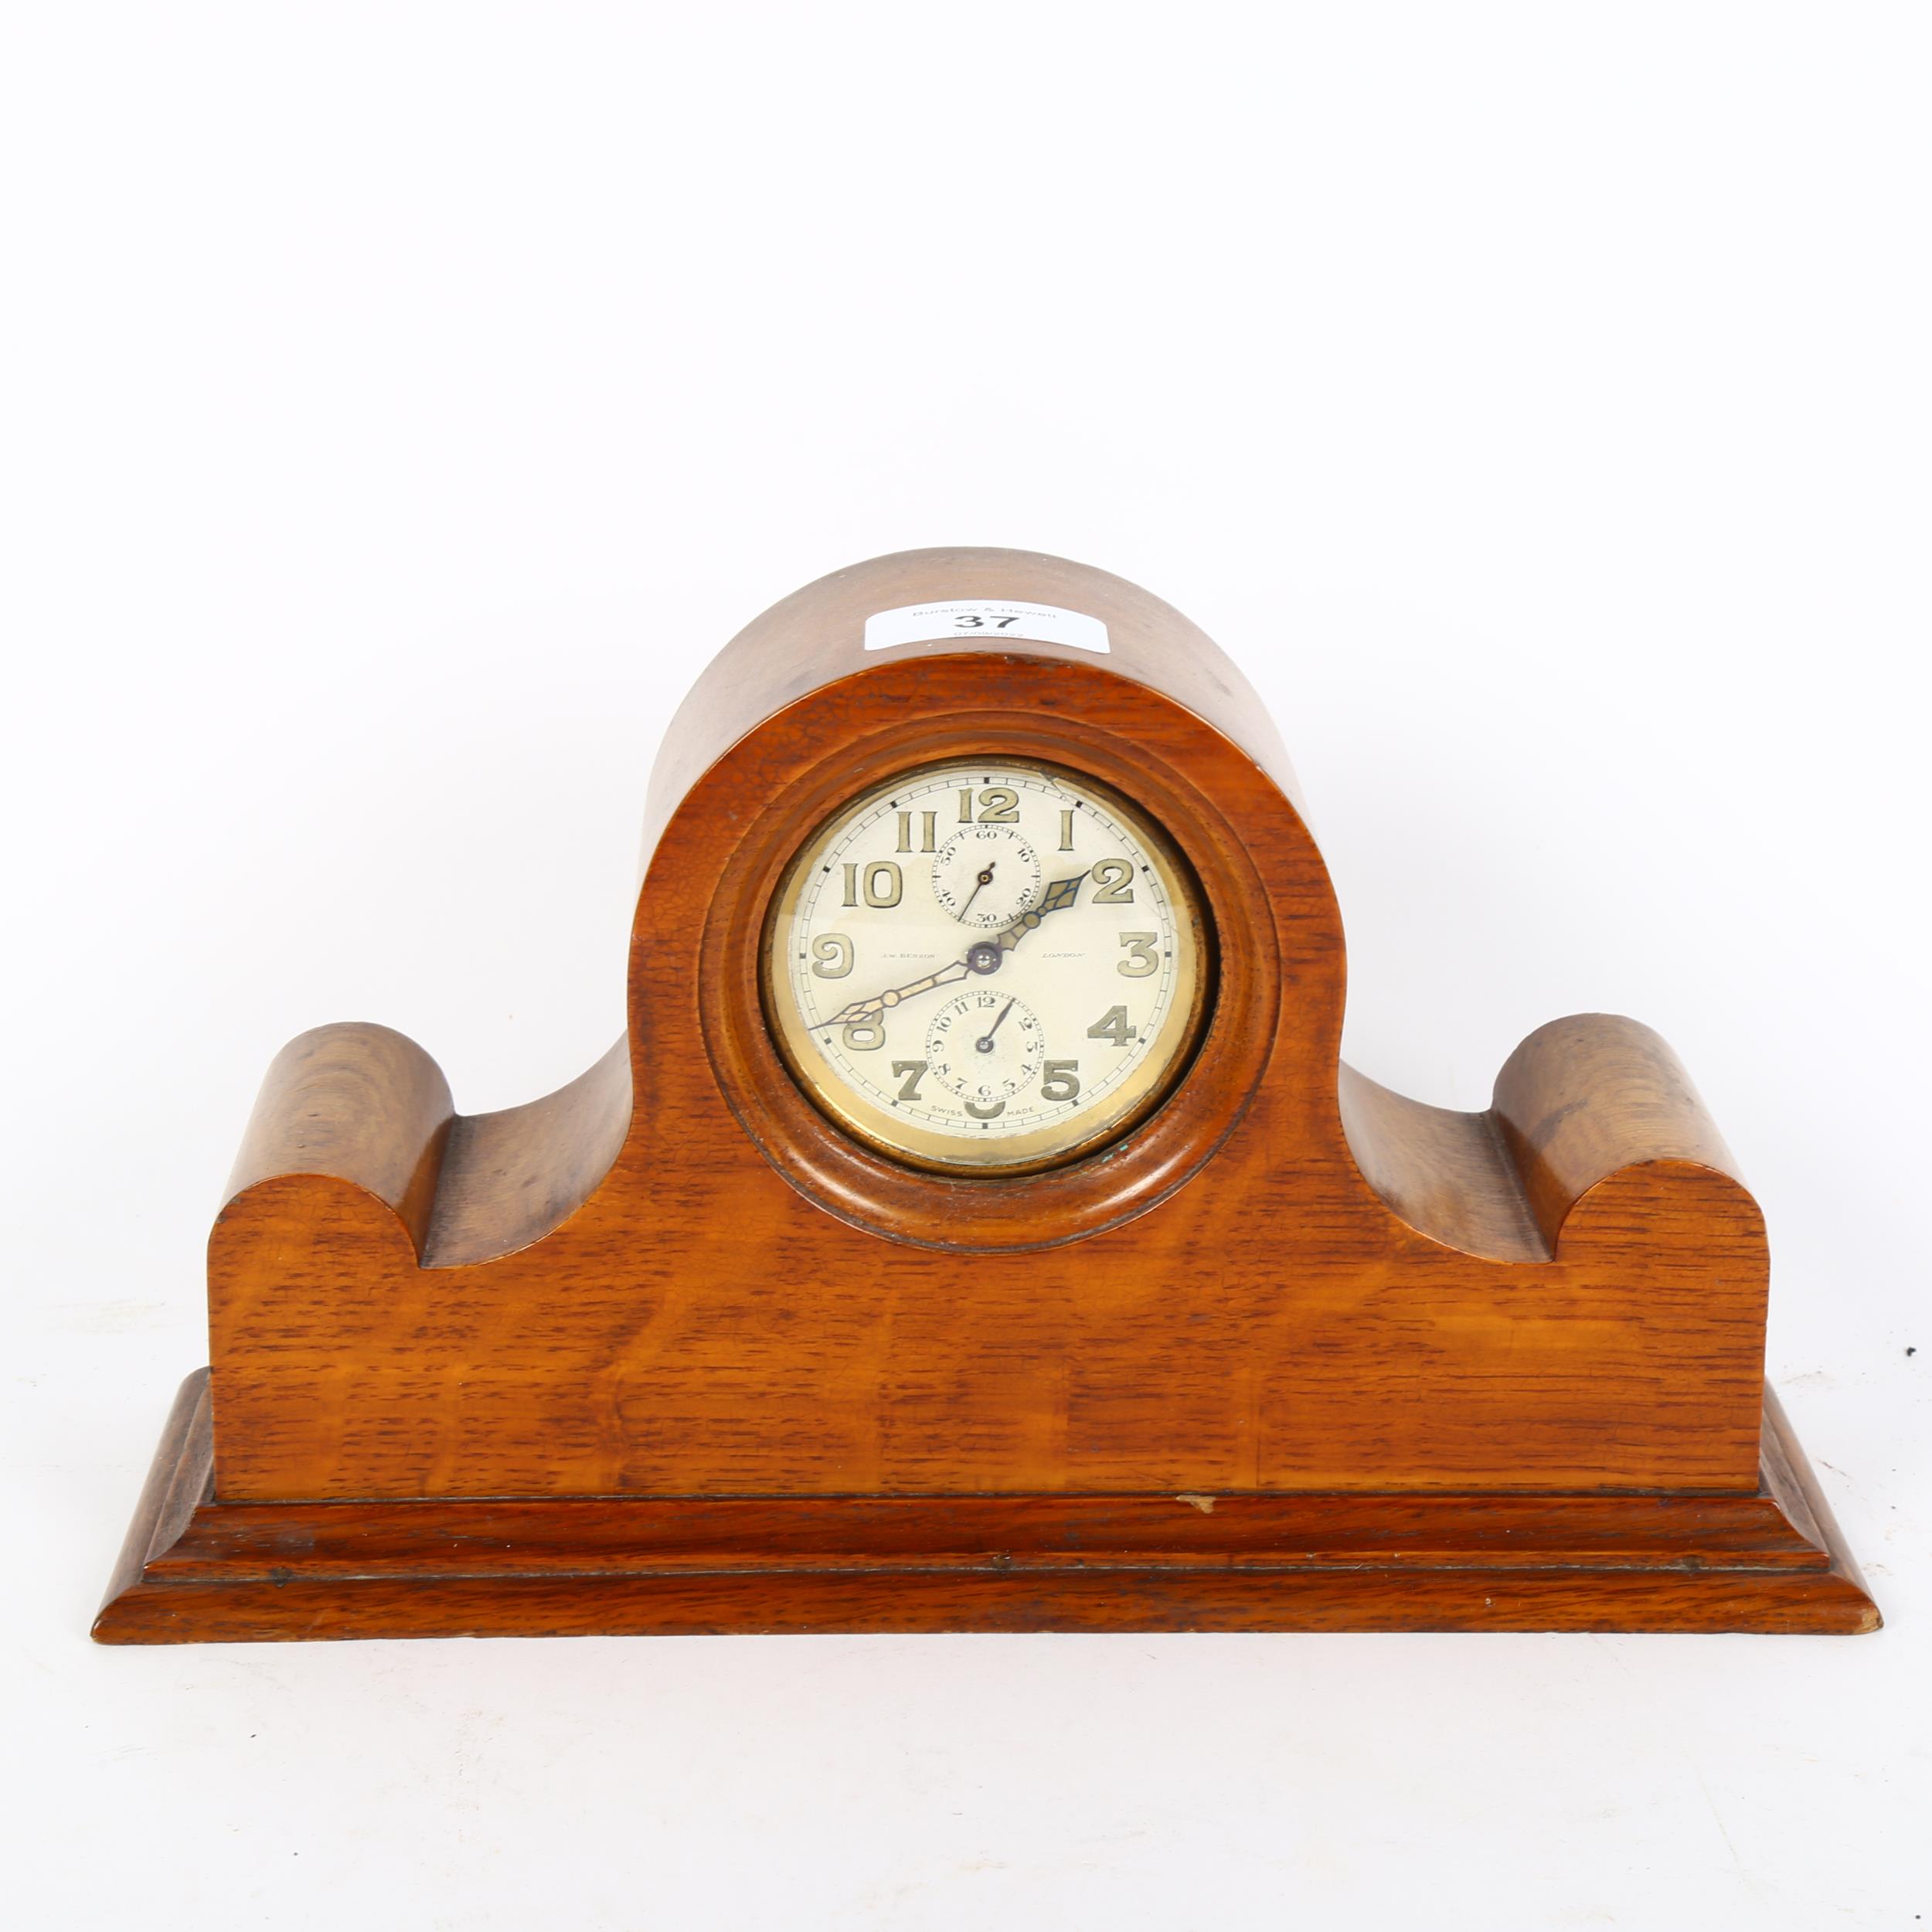 J W BENSON - an early 20th century light oak drum alarm mantel clock, Arabic numerals with